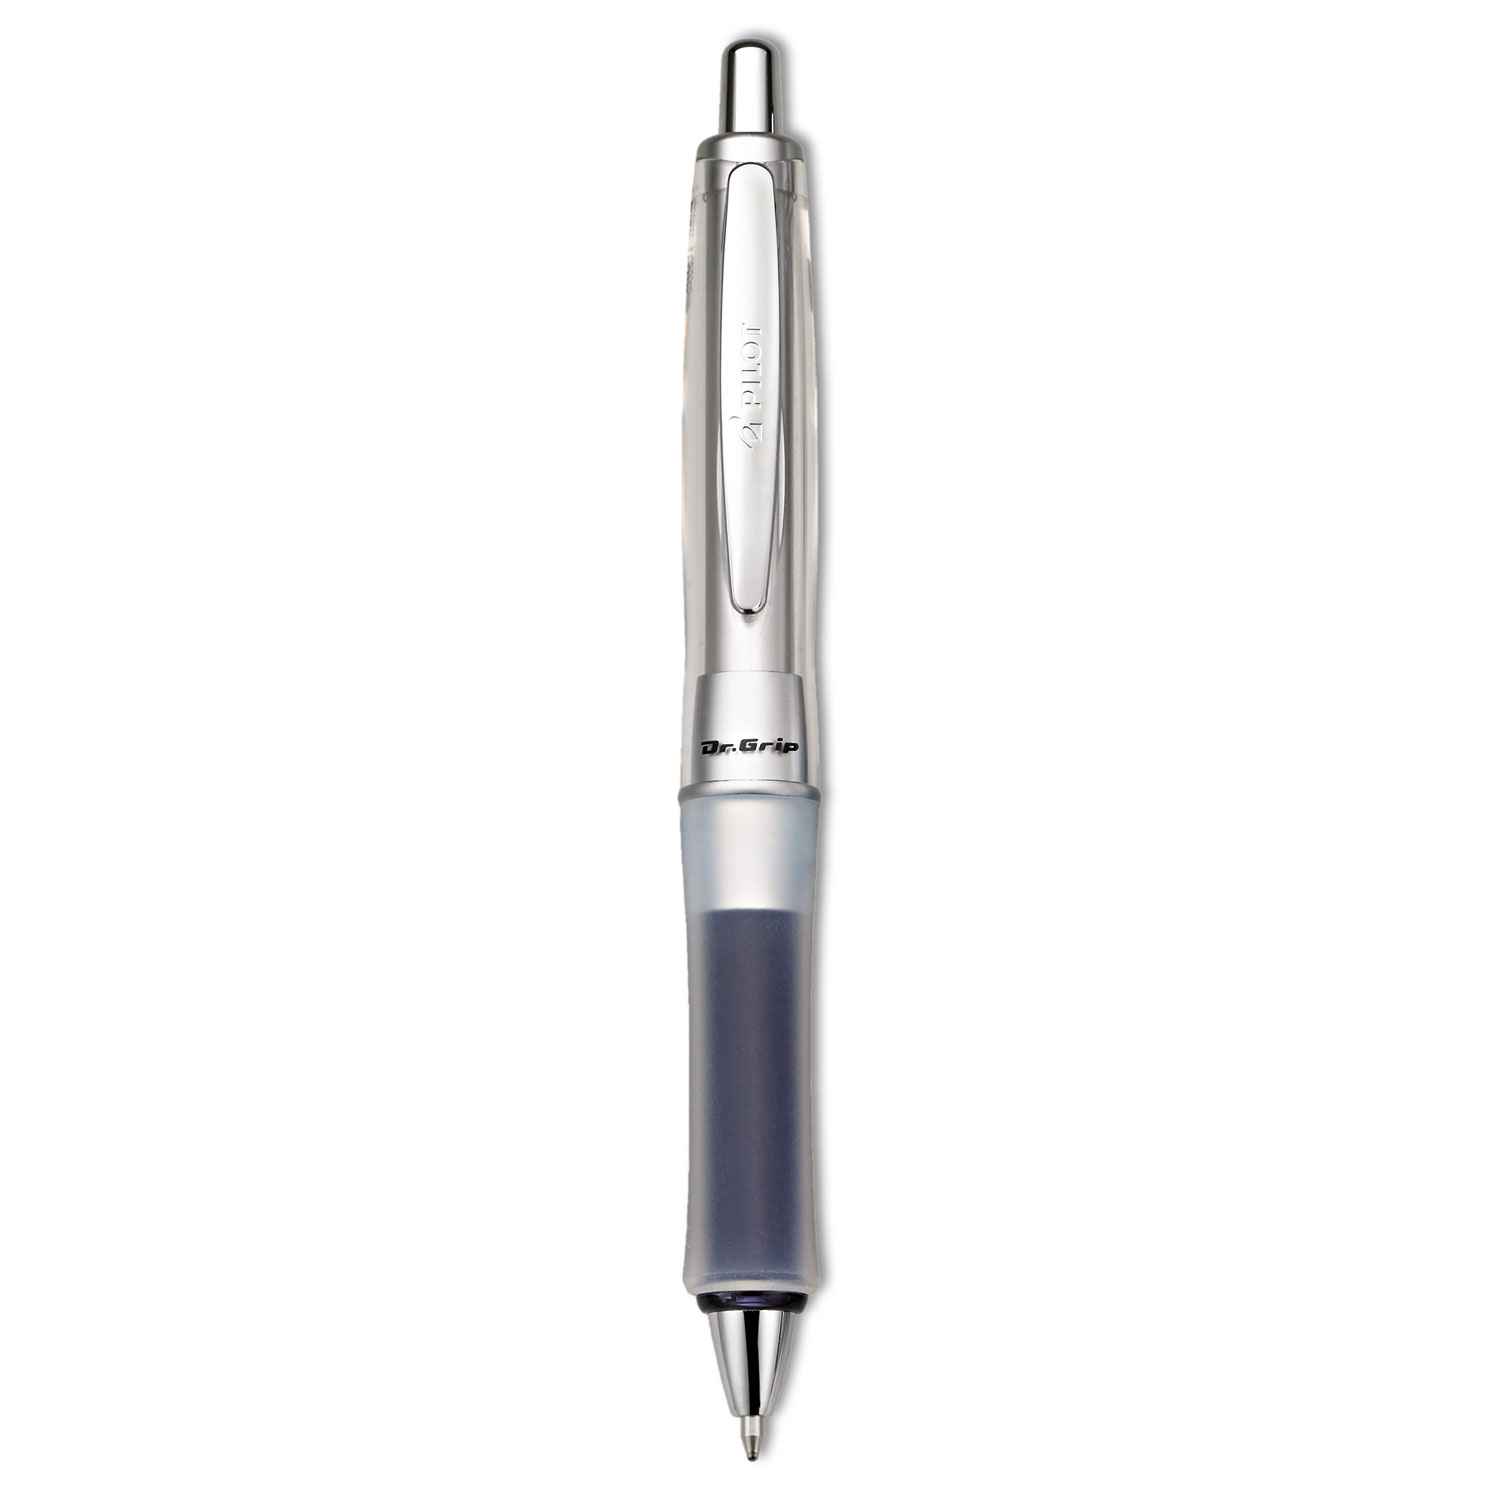  Pilot 36180 Dr. Grip Center of Gravity Retractable Ballpoint Pen, 1mm, Black Ink, Silver/Gray Barrel (PIL36180) 